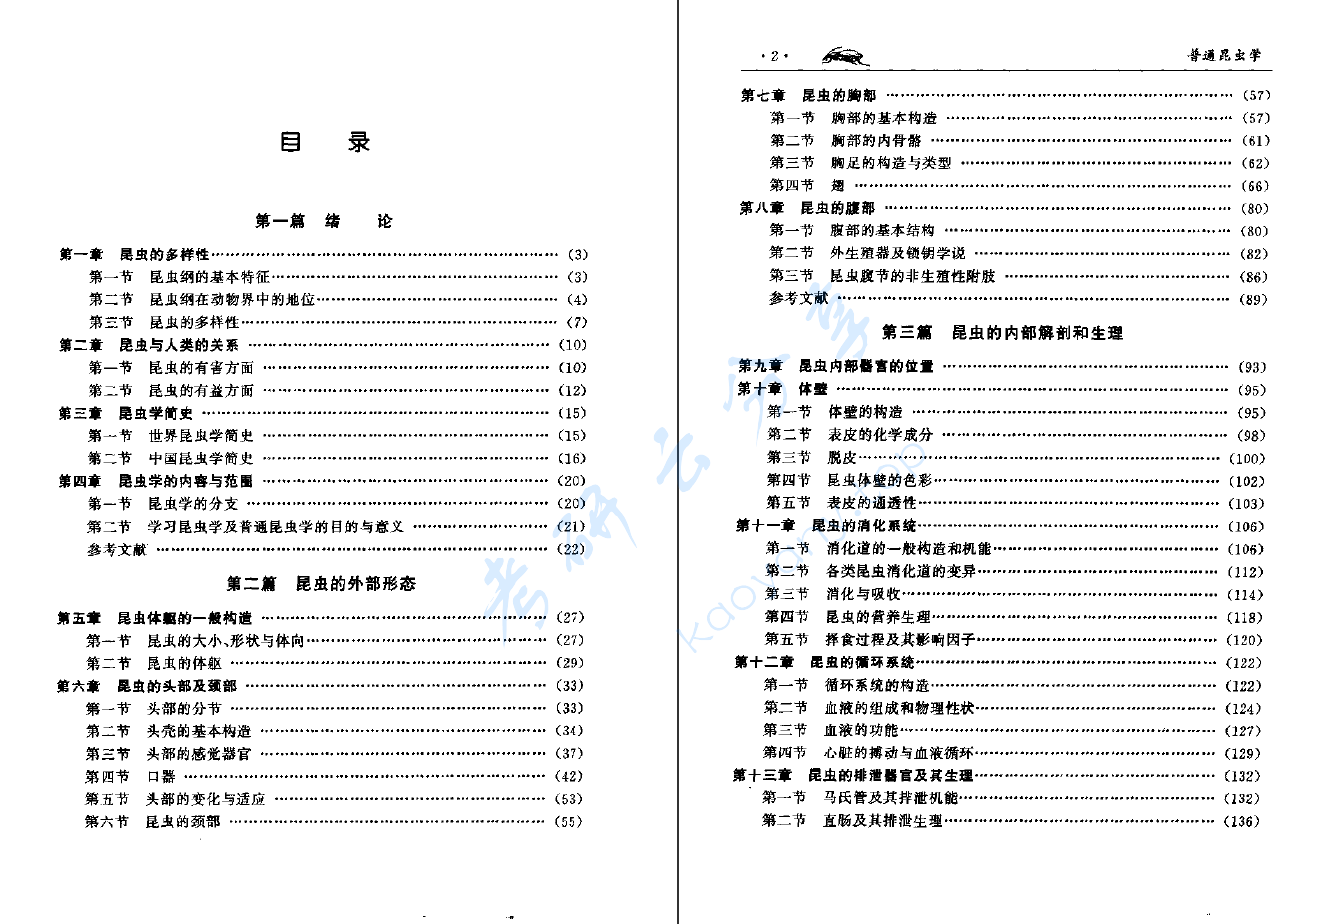 《普通昆虫学》彩万志.pdf,image.png,普通昆虫学,彩万志,第2张